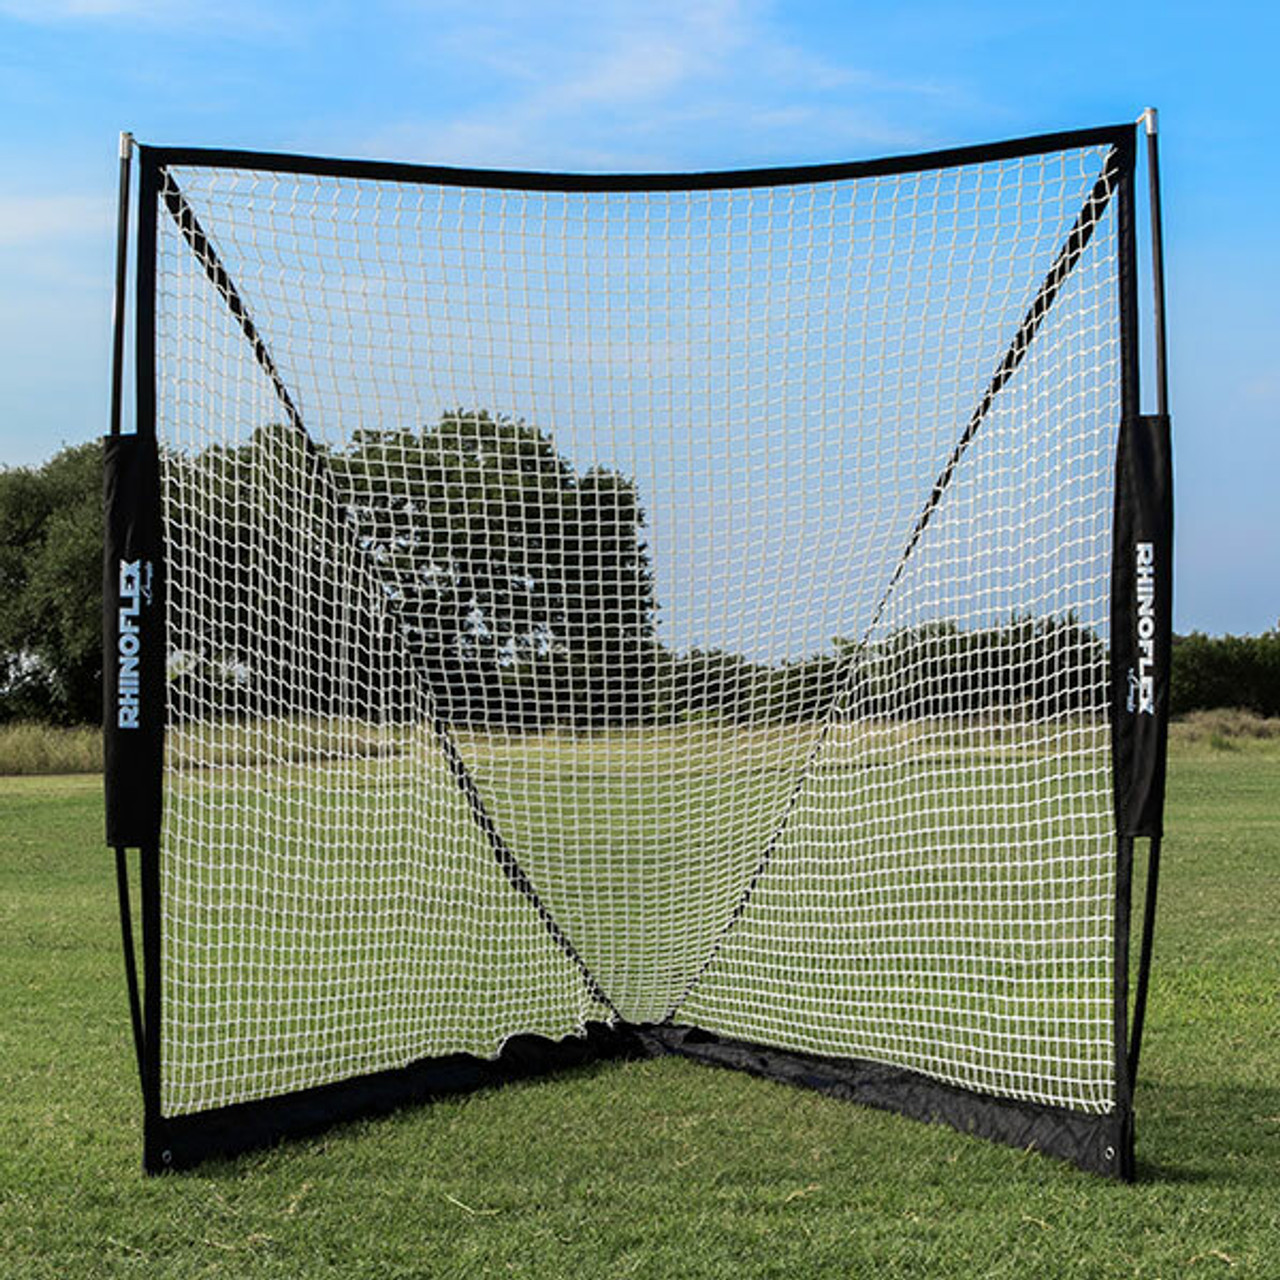 Rhino Flex Portable Lacrosse Goal - Life Style